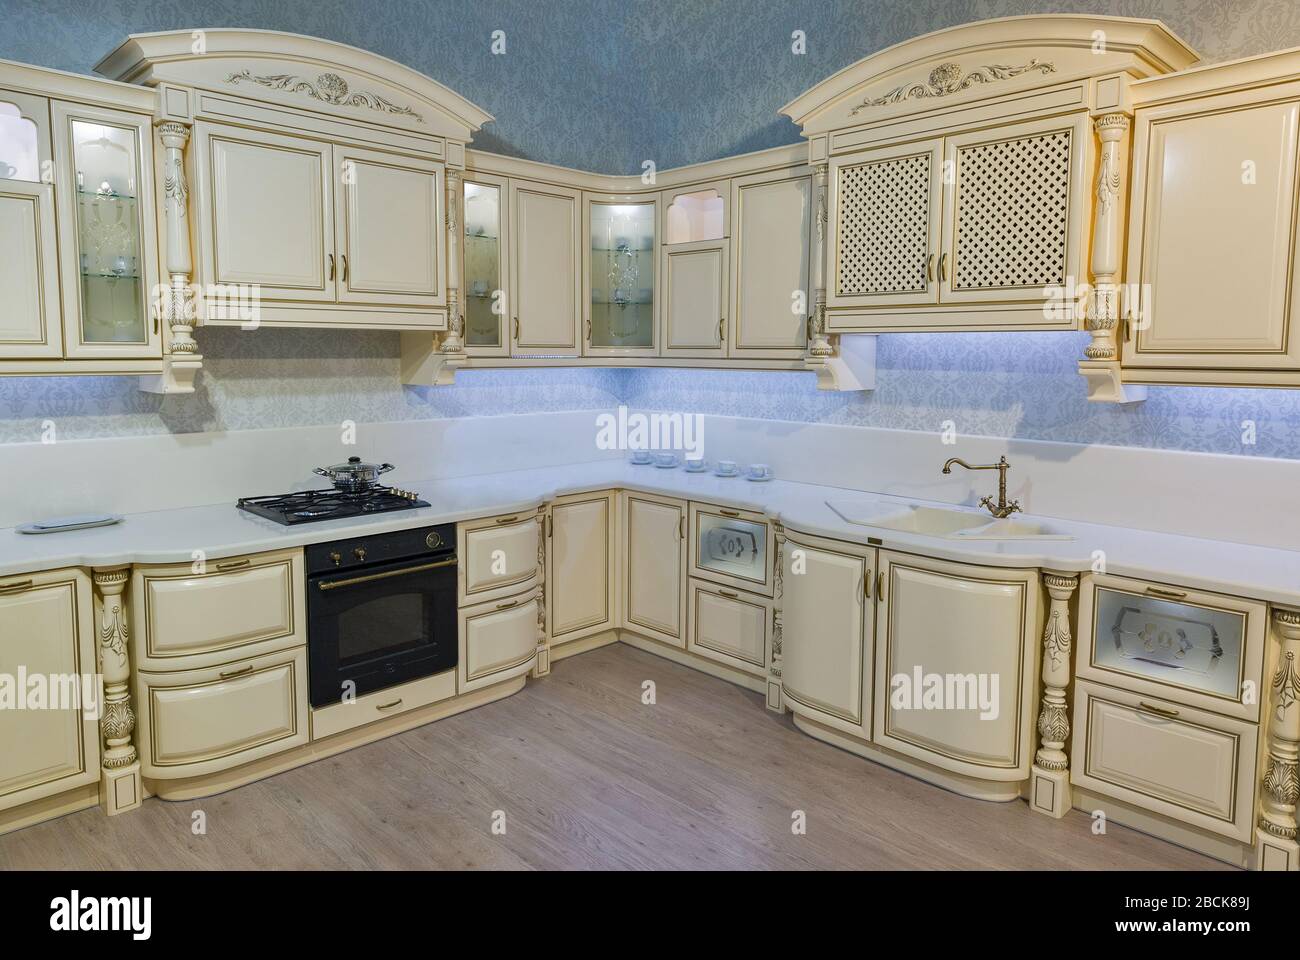 Modern kitchen furniture interior in baroque style Stock Photo - Alamy